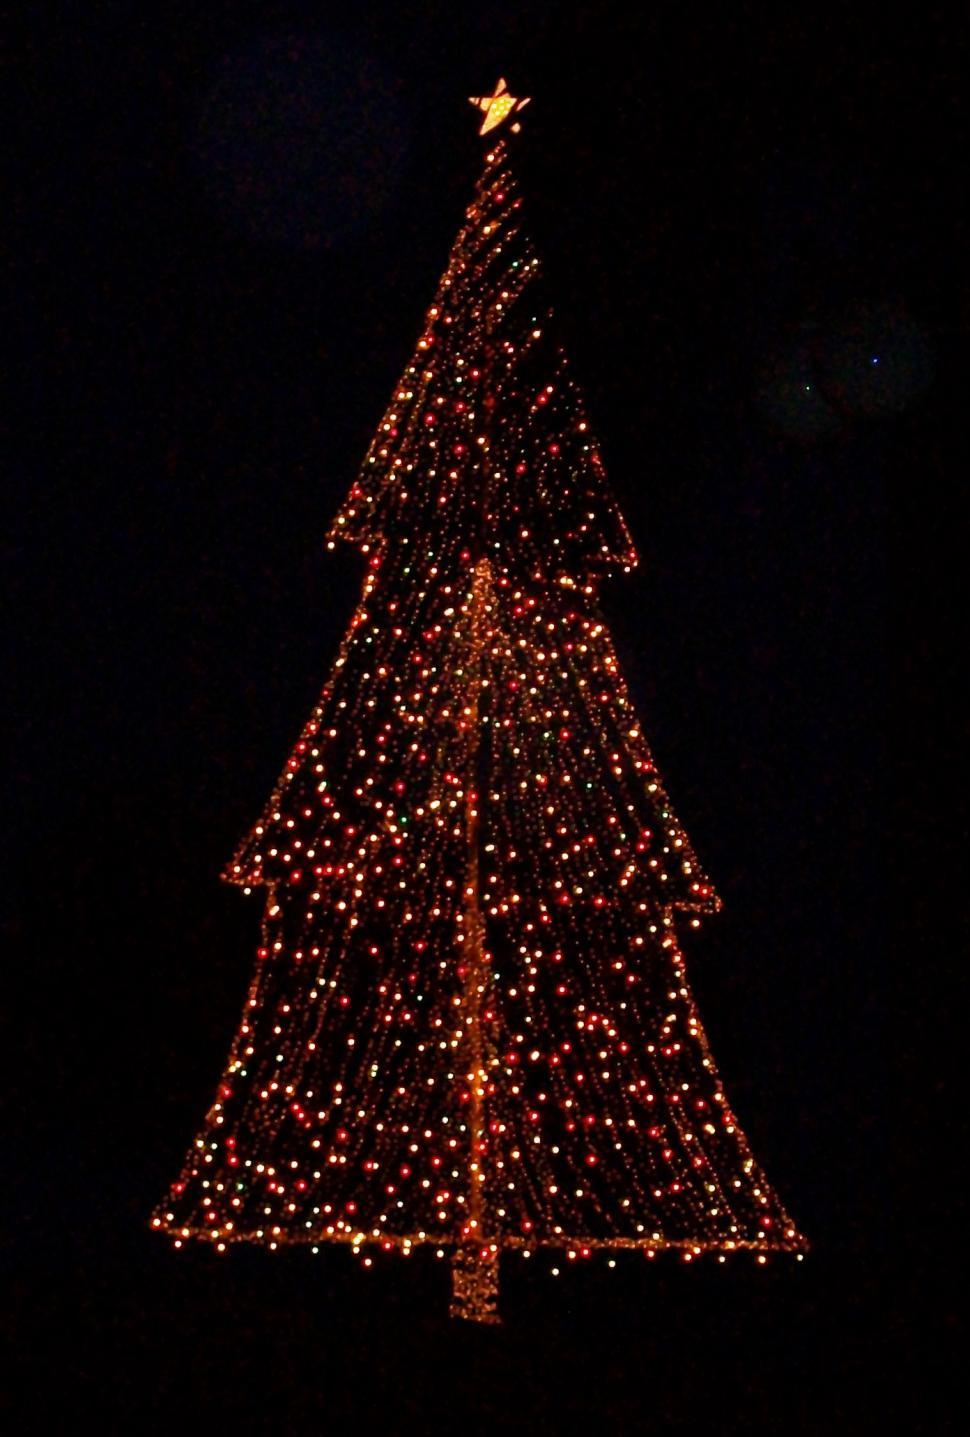 Free Image of Christmas Tree Lights on Black Background 